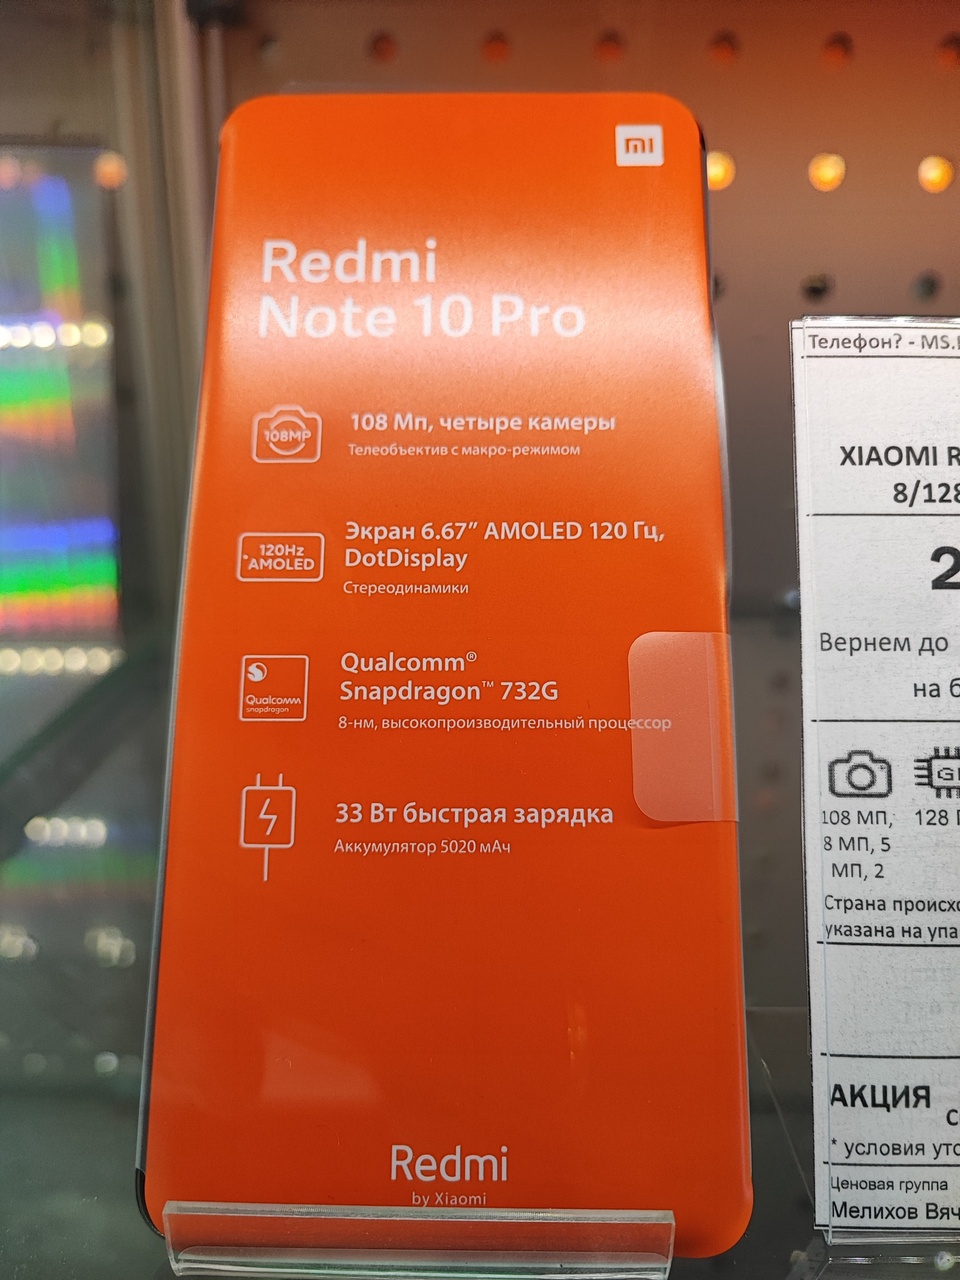 Xiaomi redmi note 10 Pro - 28 990 ₽, заказать онлайн.